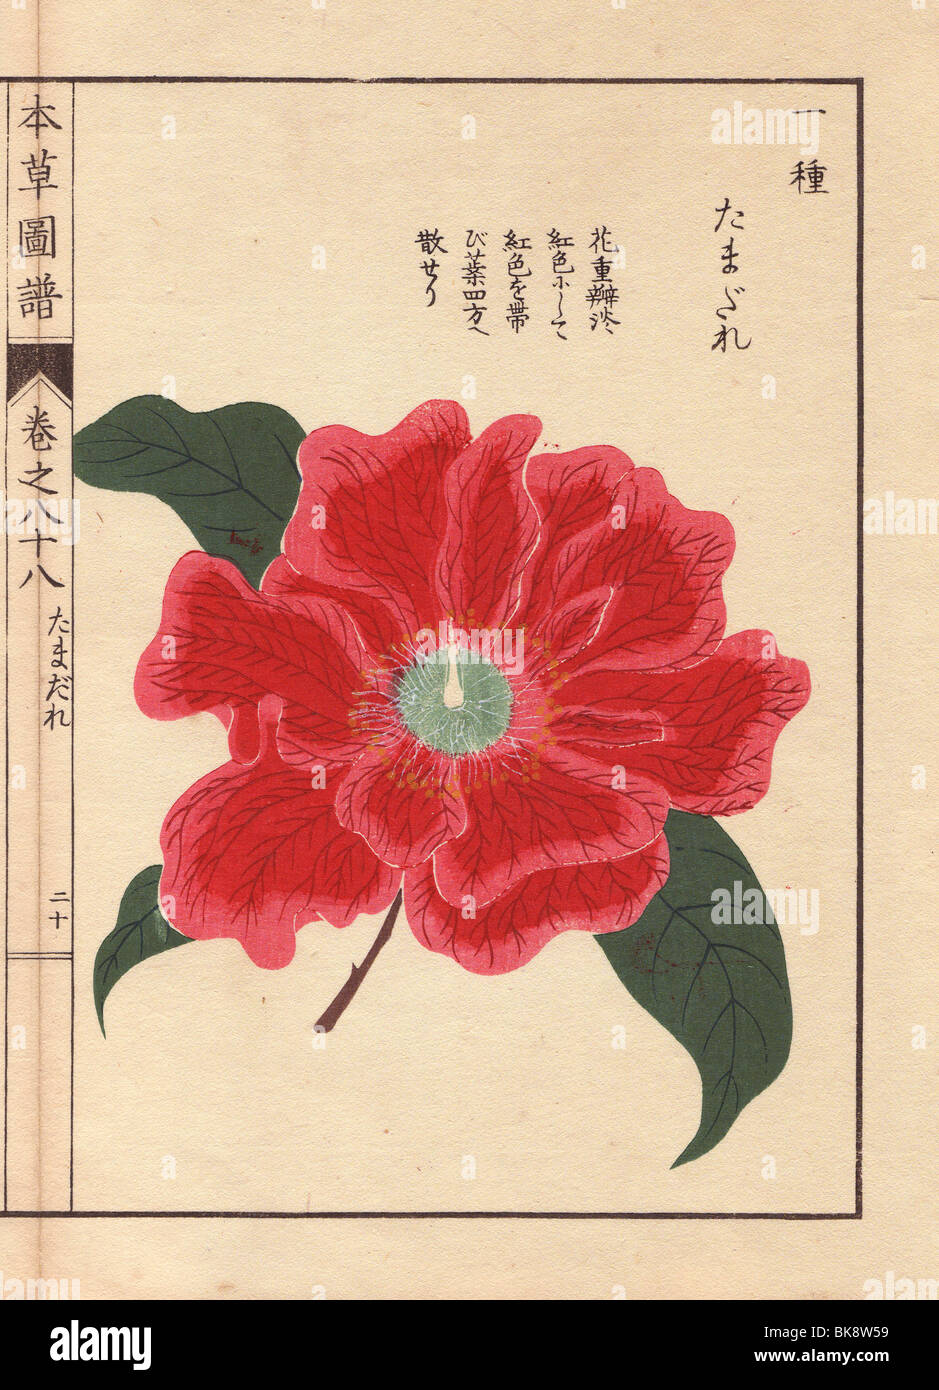 Crimson camellia 'Tamagure'  Thea japonica Nois. flore pleno forma Stock Photo